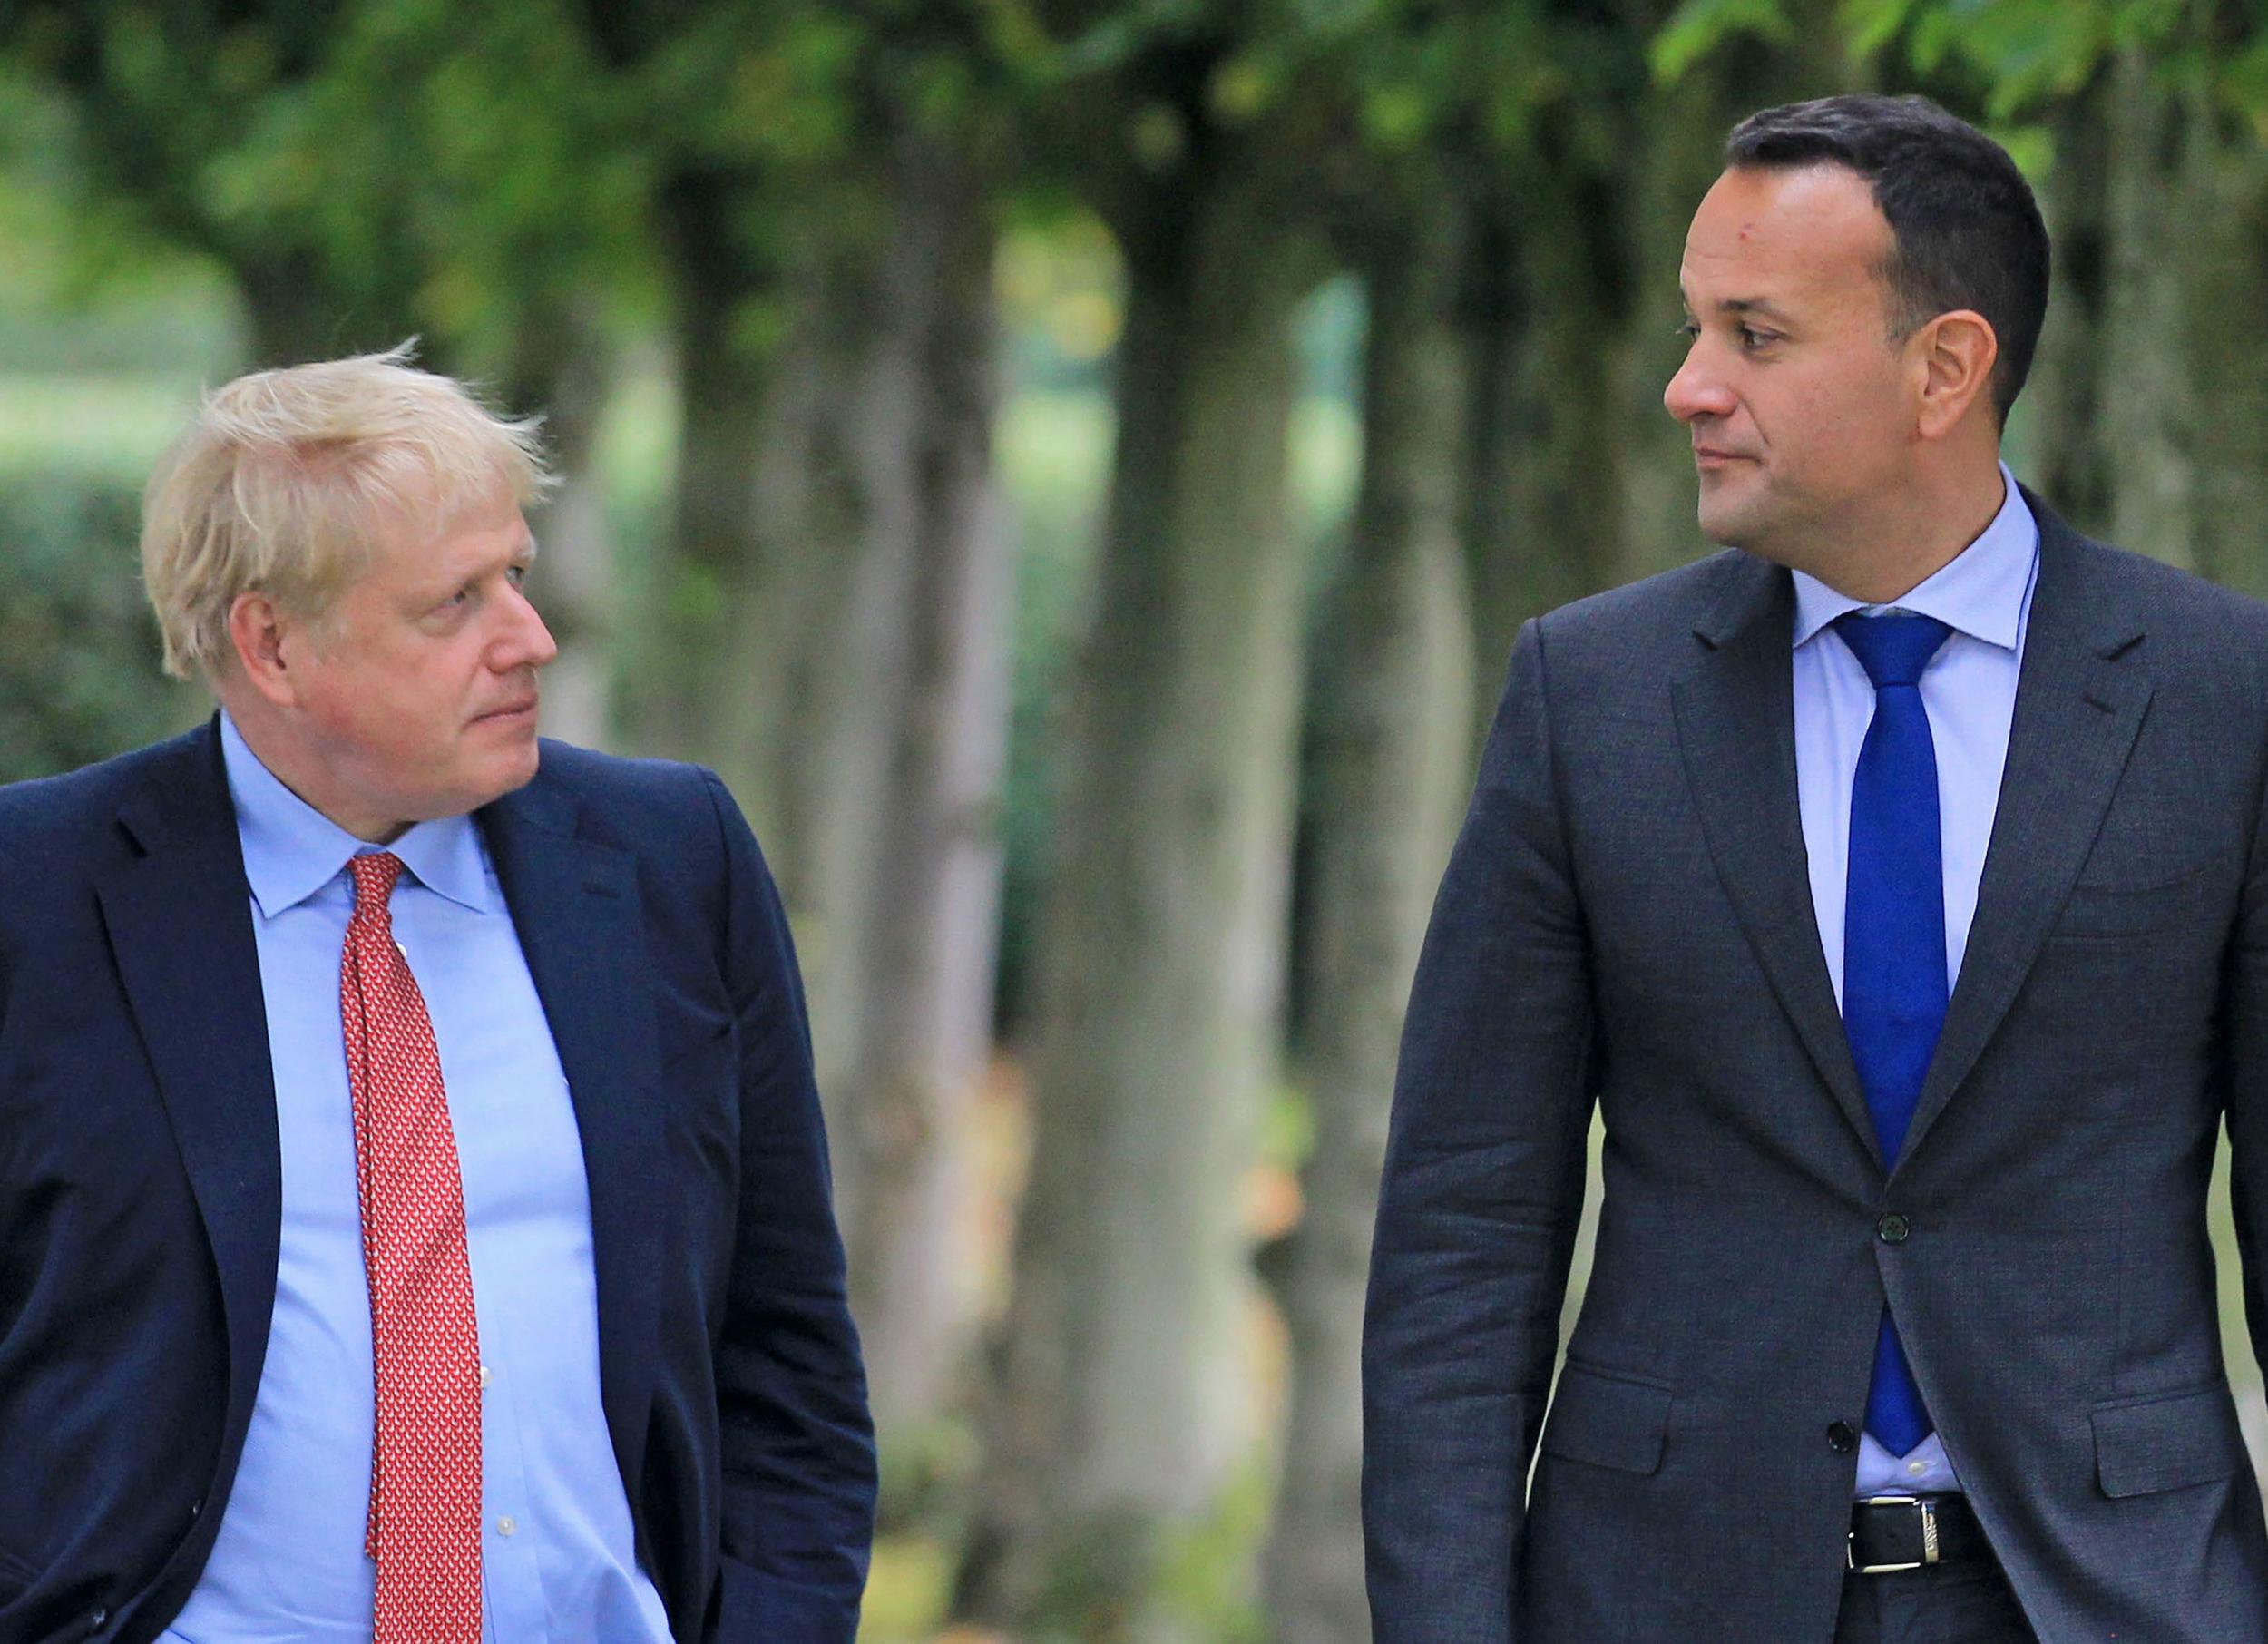 Boris Johnson and Leo Varadkar’s meeting on Thursday sparked optimism